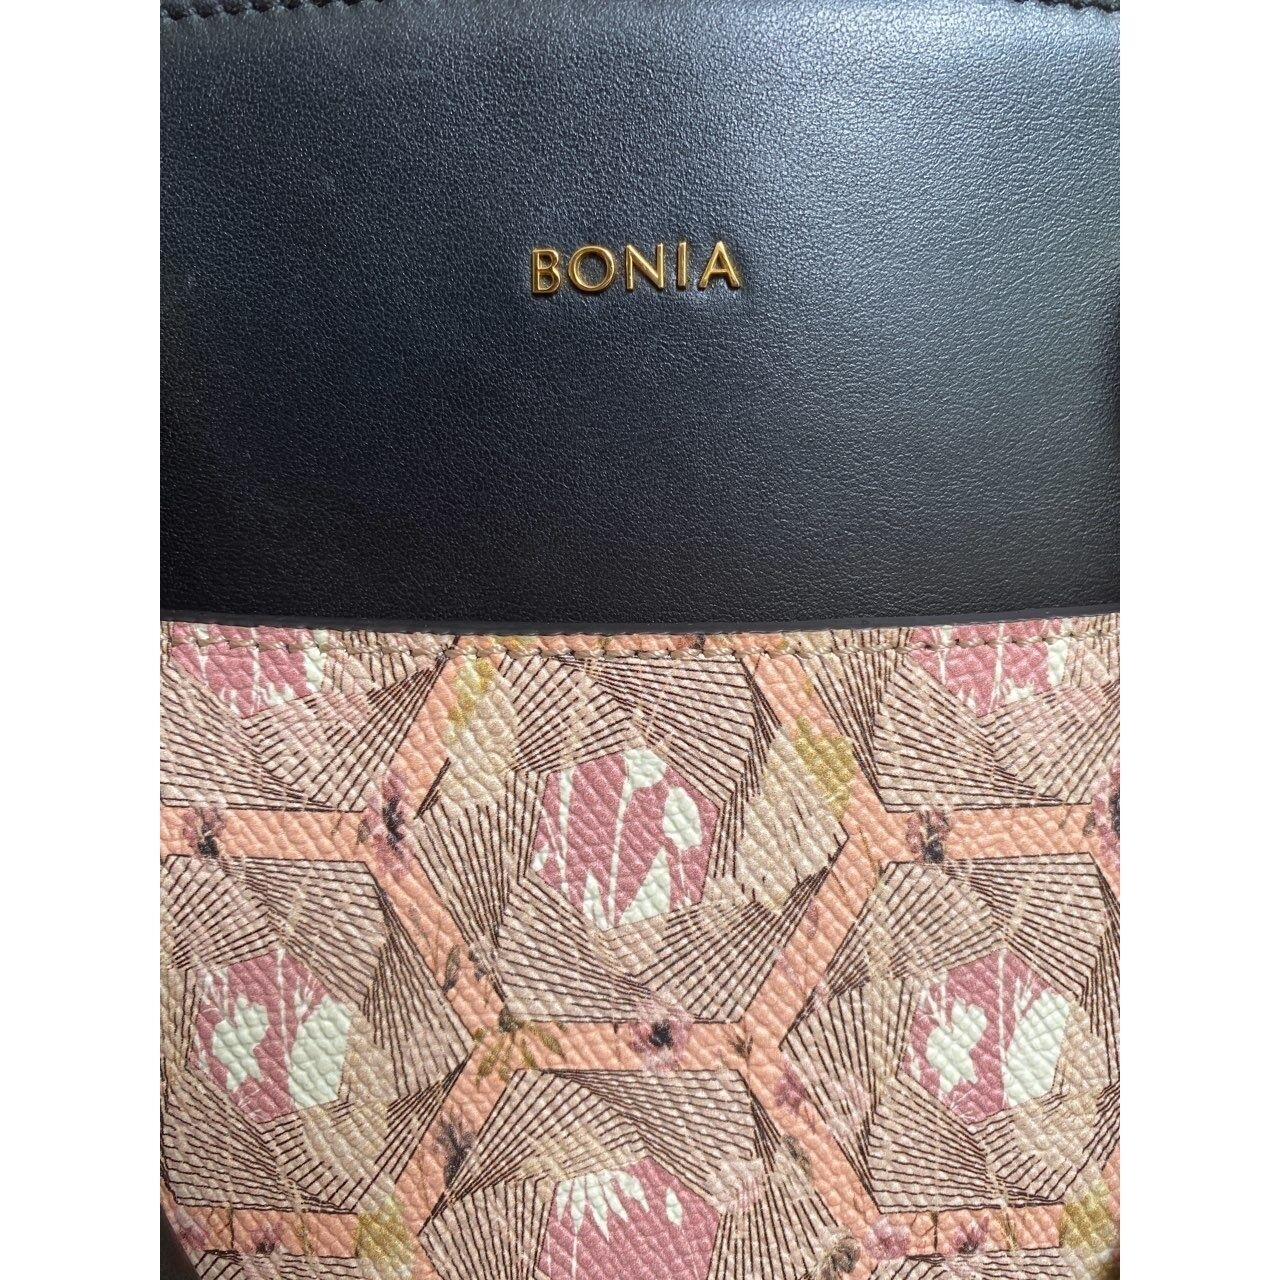 Bonia Black & Pink Geometric Handbag